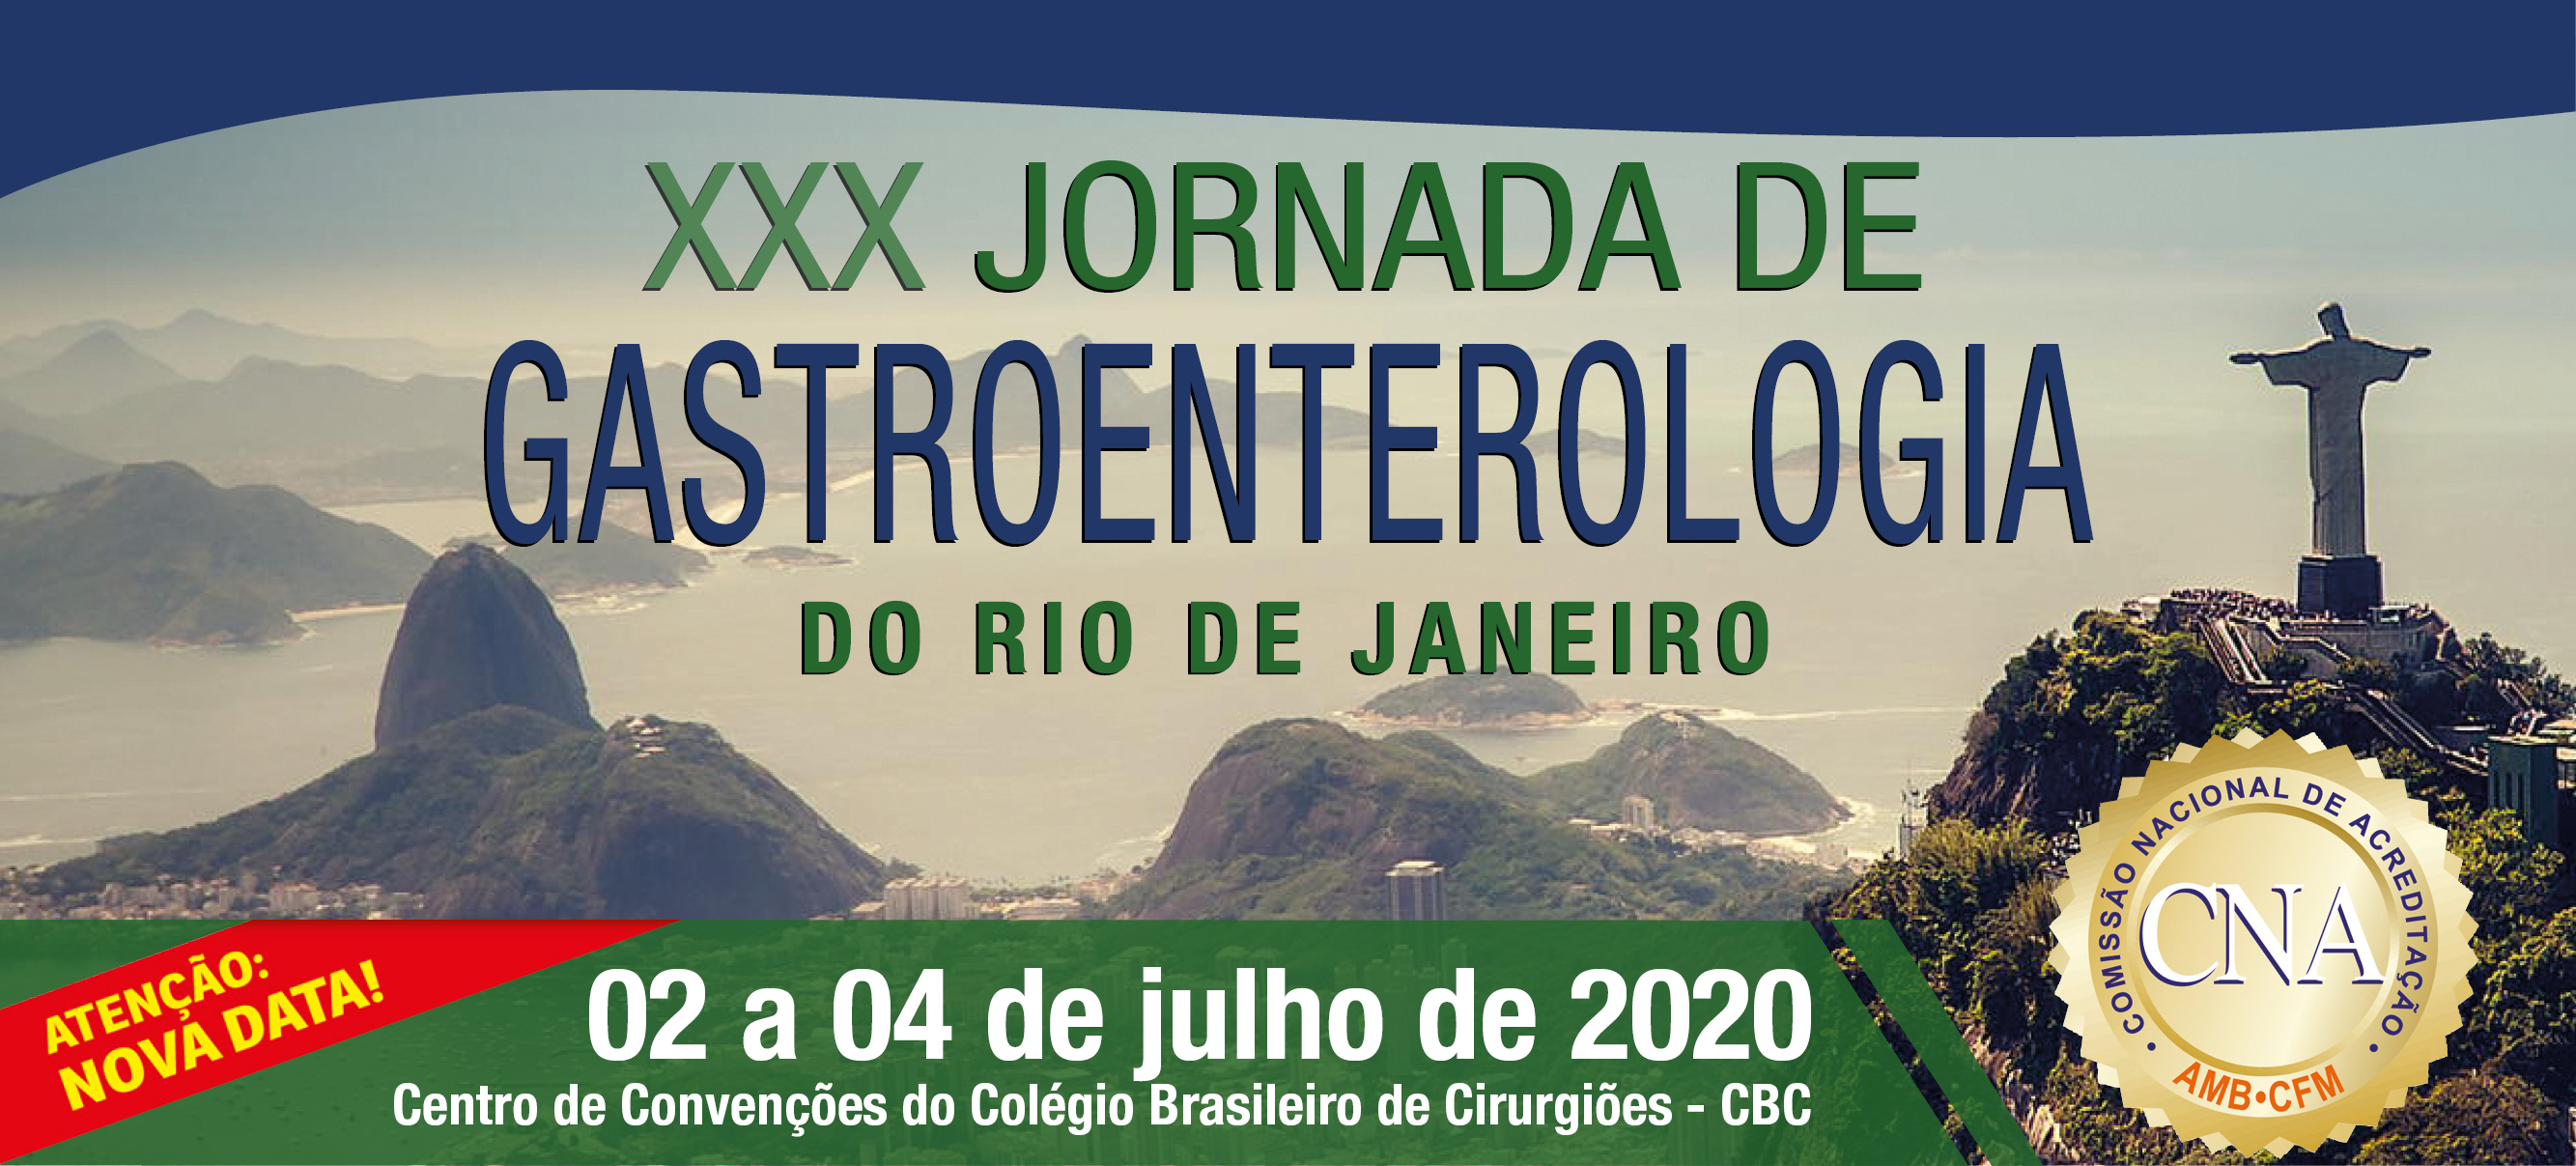 Banner site_XXX Jornada de Gastroenterologia_v2